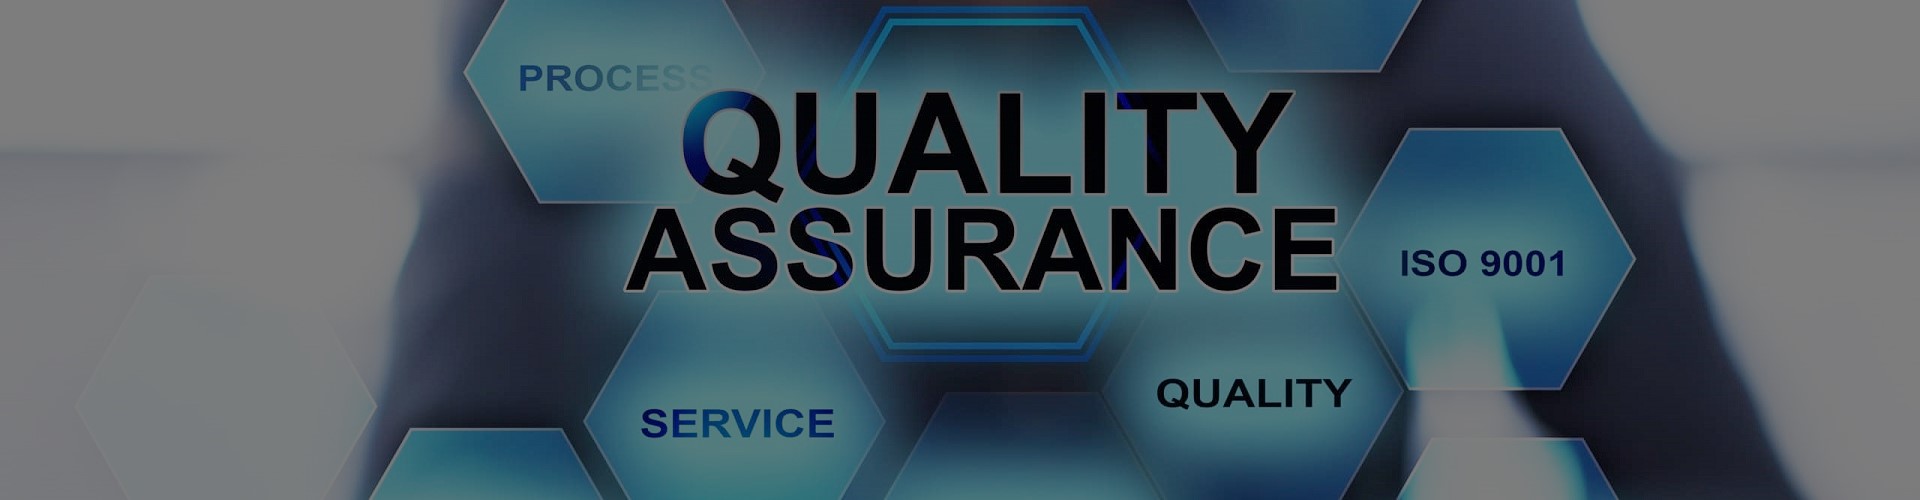 Services- ASSURANCE QUALITY